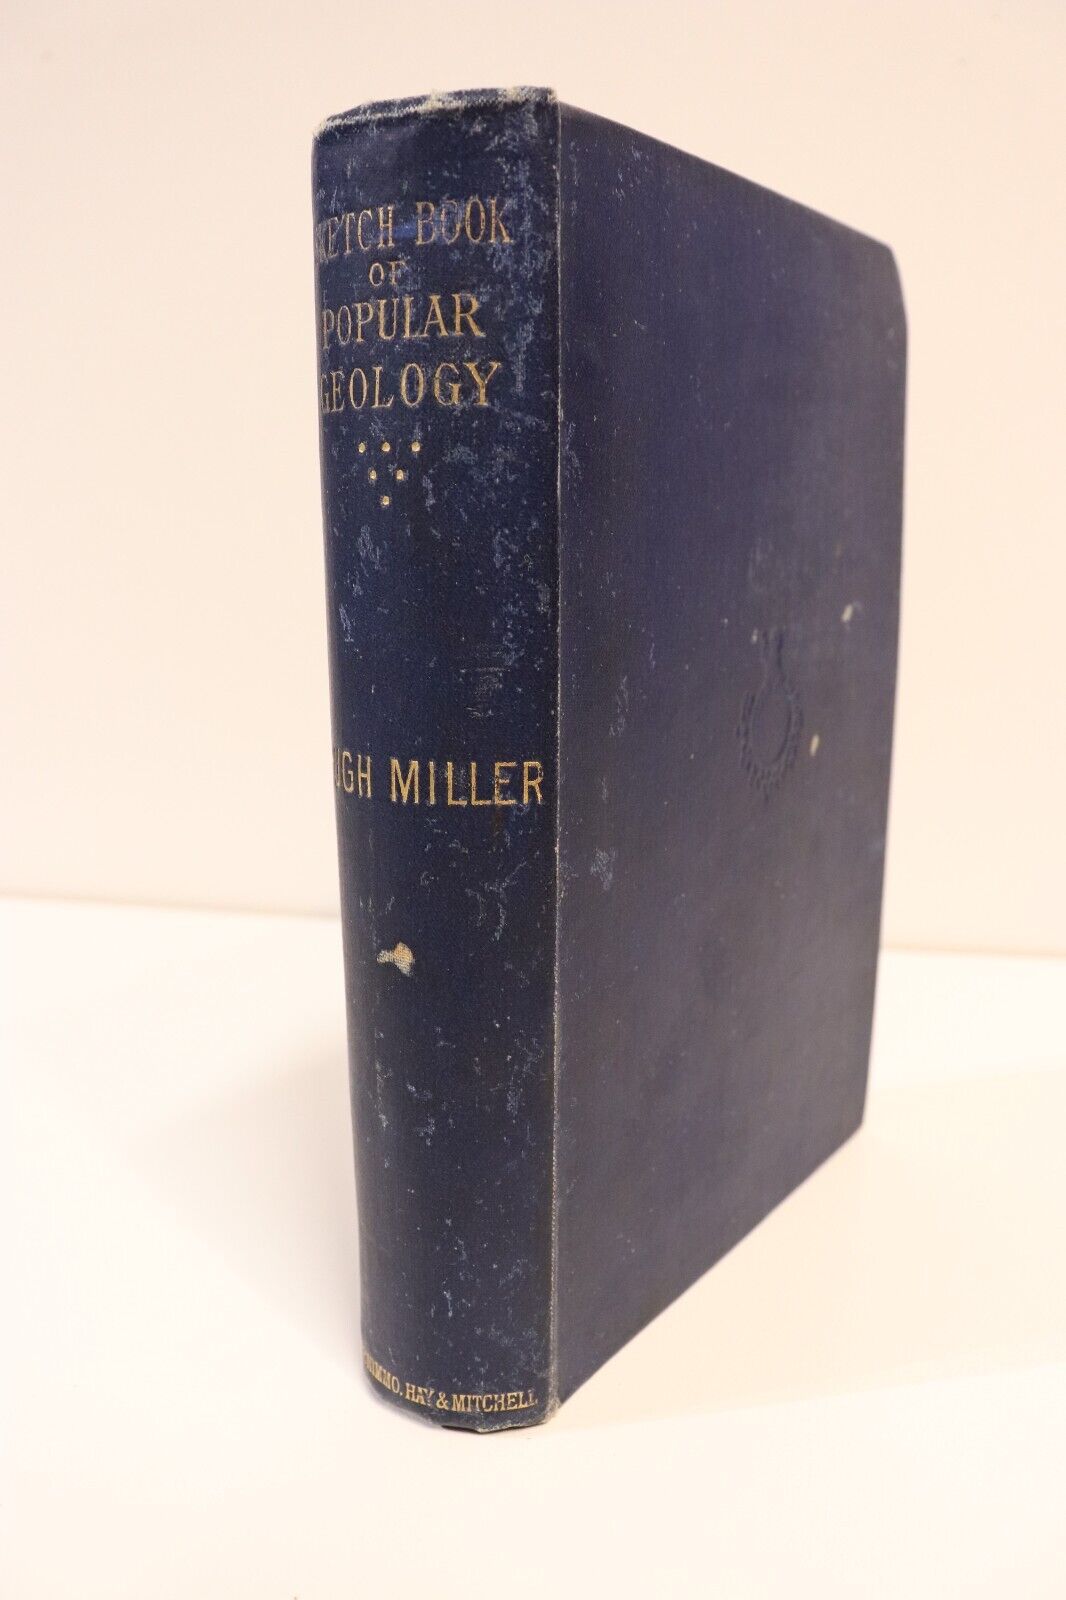 Sketch Book Of Popular Geology by Hugh Miller - 1892 - Natural History Book